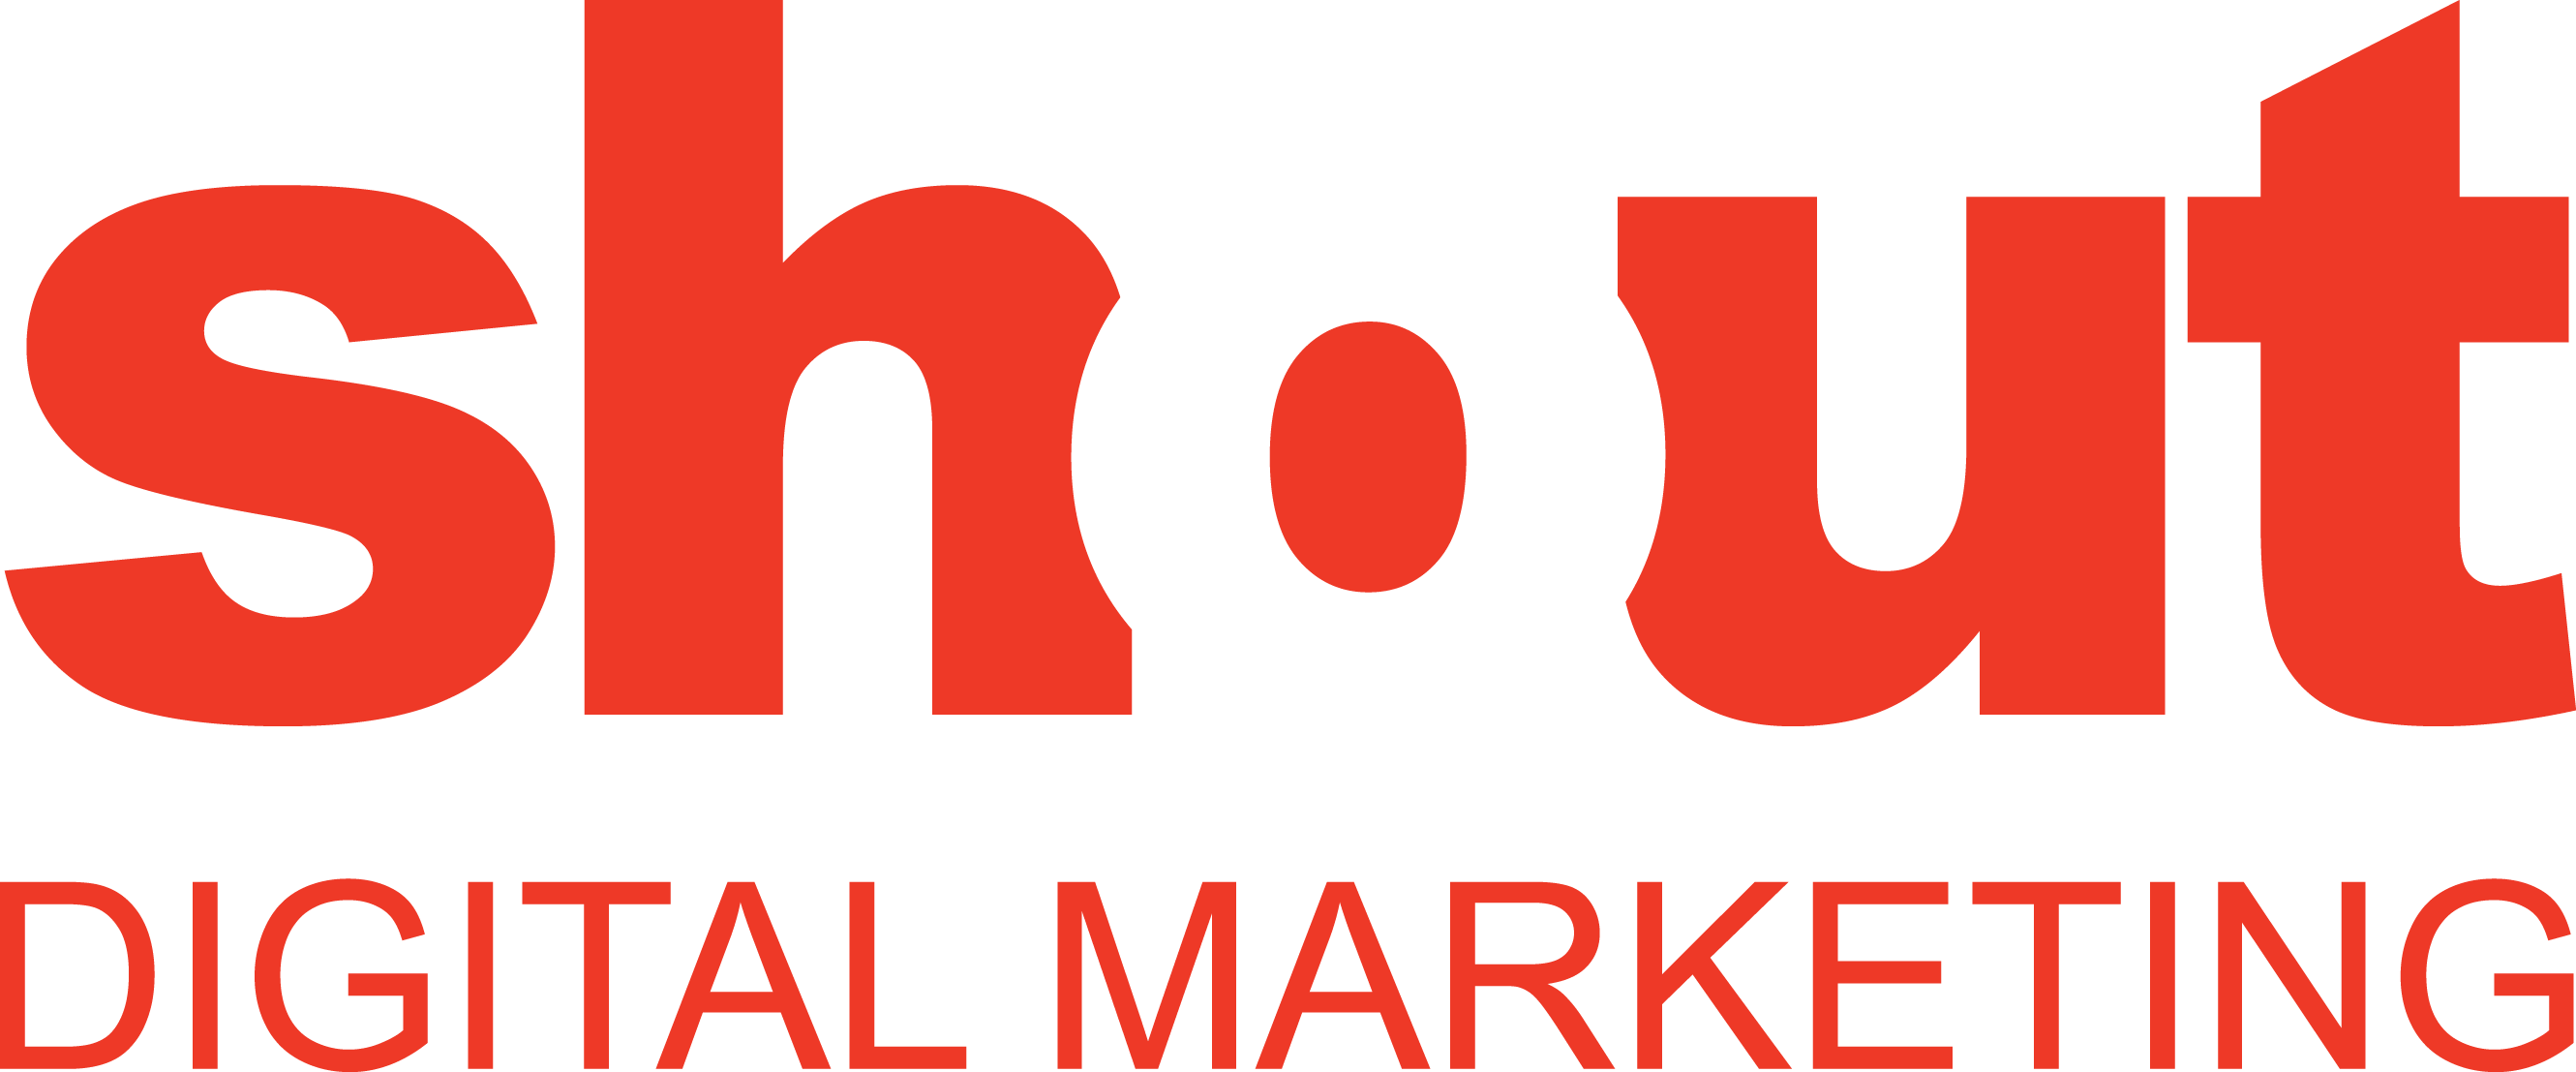 Shout Logo - SHOUT Digital Marketing – Digital Marketing